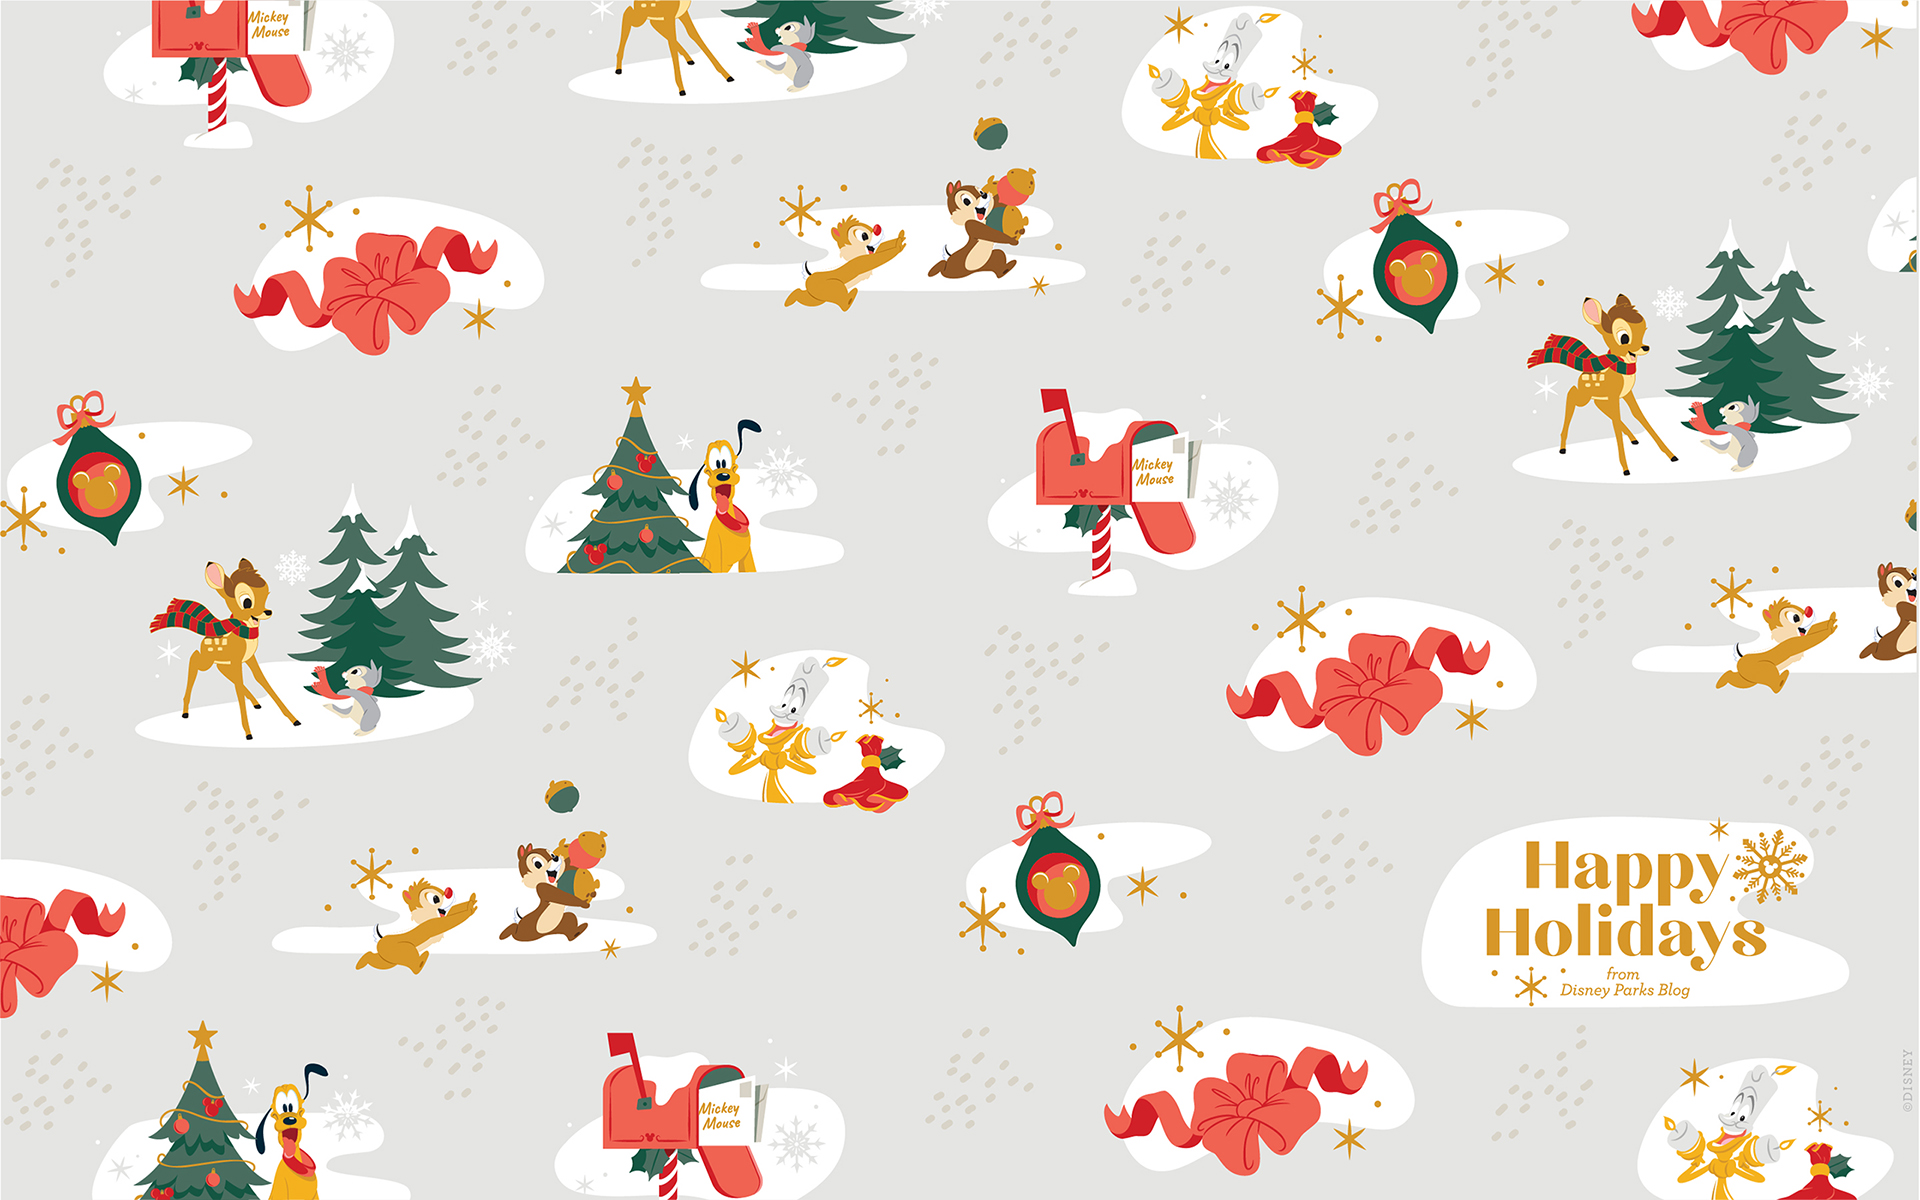 2020 Holiday Wrapping Paper Wallpaper – Desktop/iPad | Disney Parks Blog